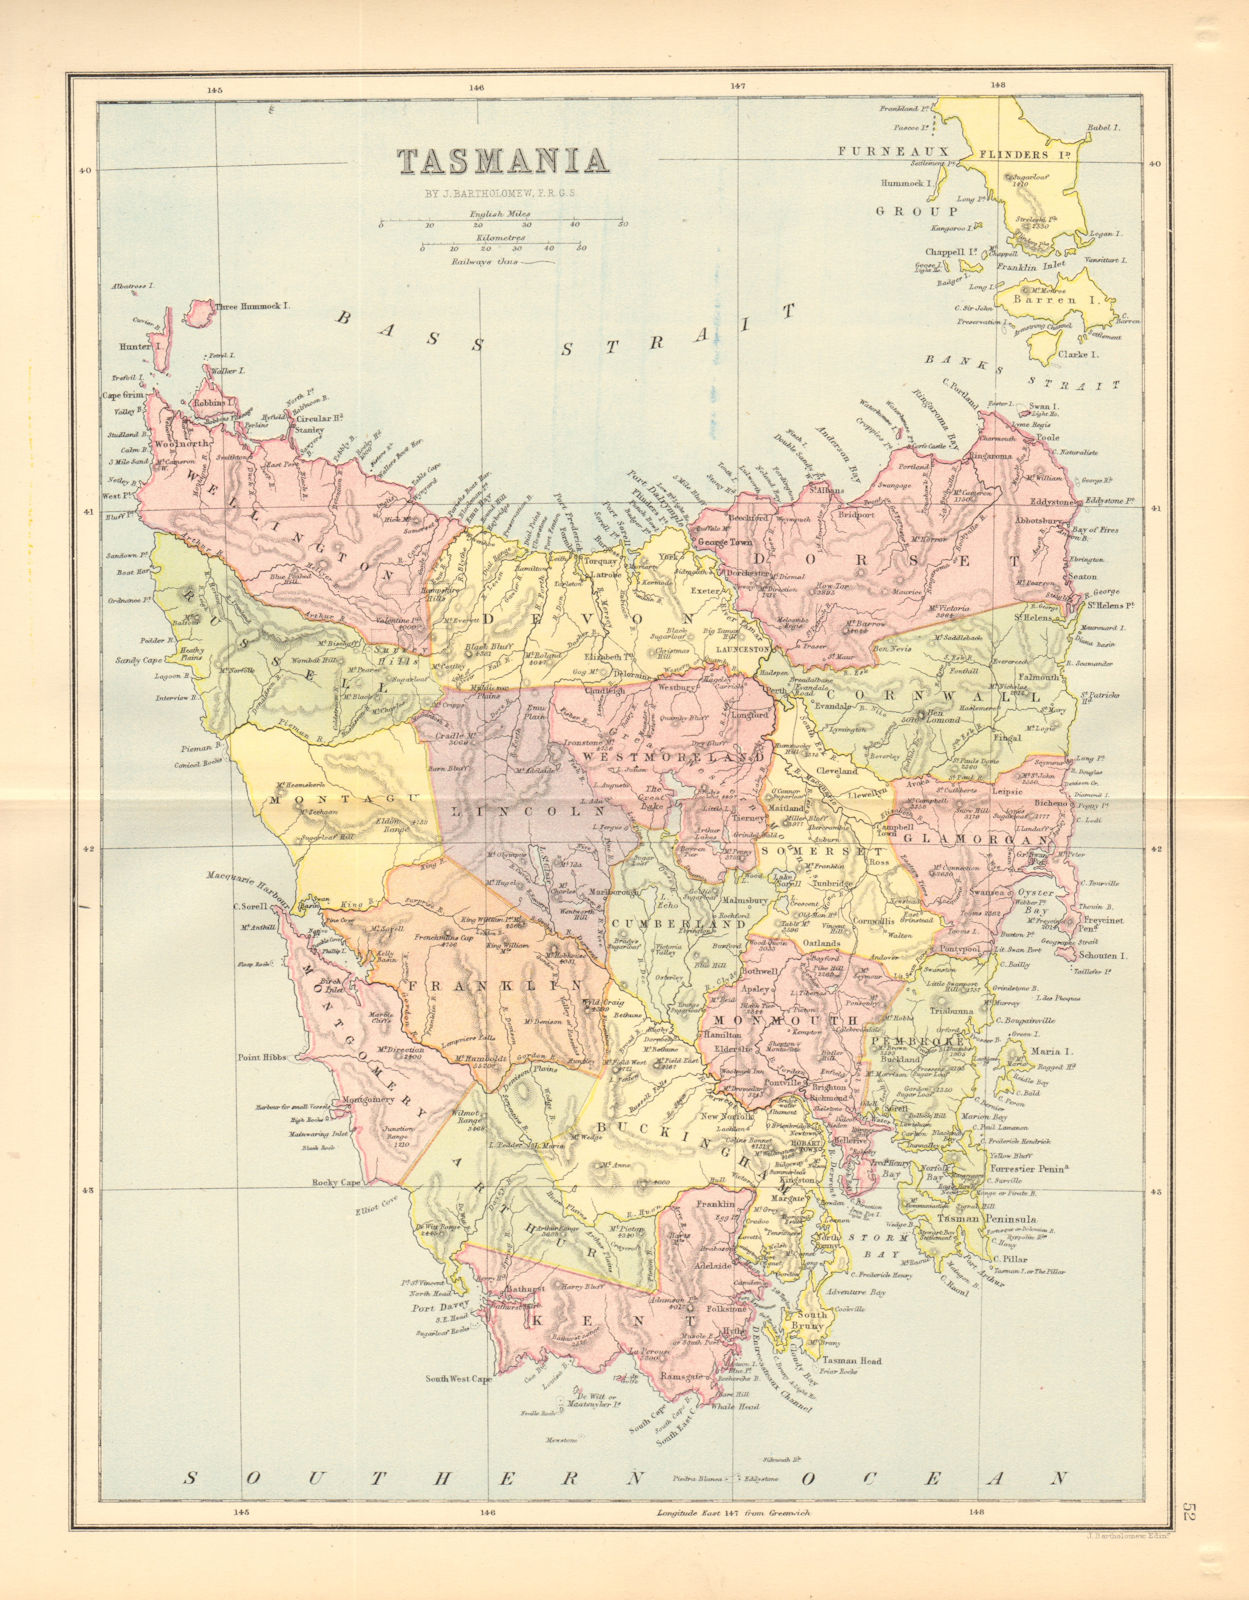 TASMANIA. State map showing counties & railways. Australia. BARTHOLOMEW 1876